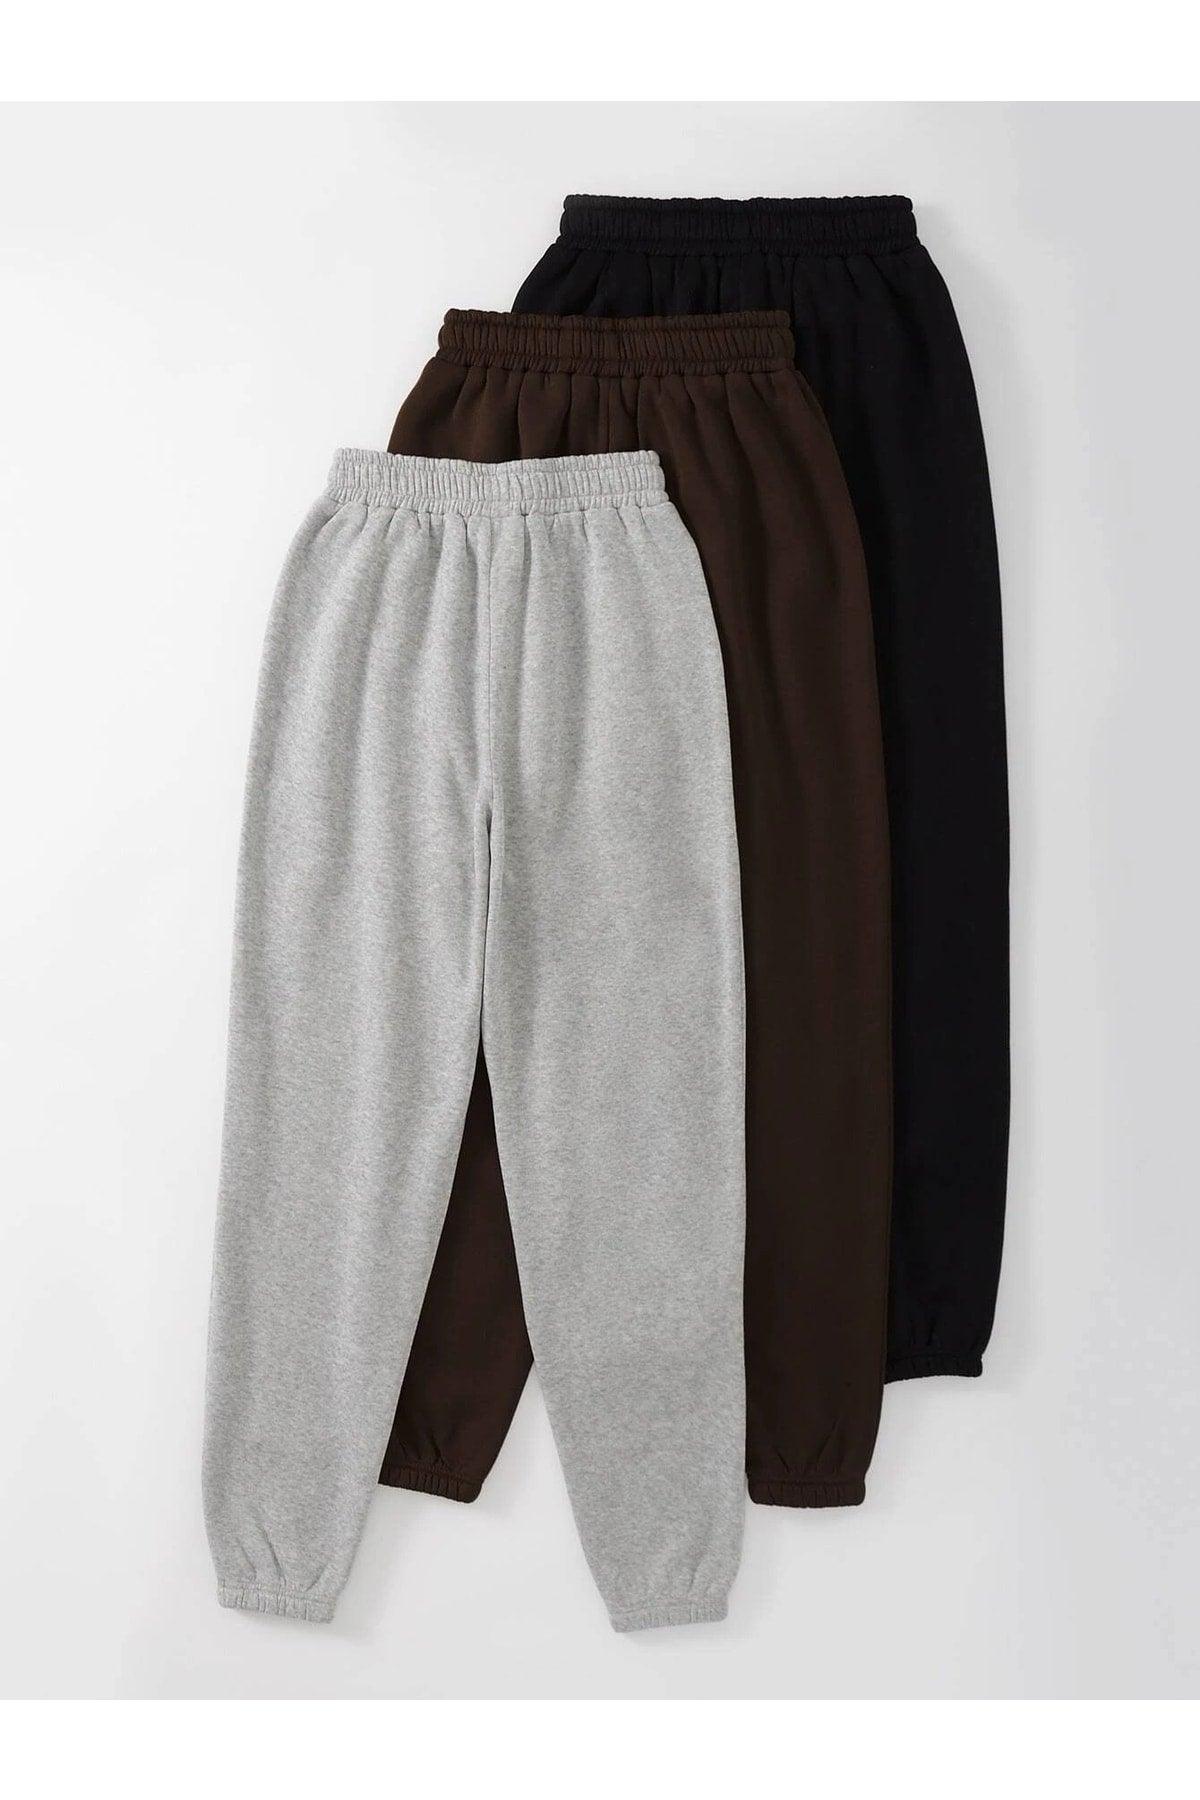 3-pack Jogger Sweatpants - Black, Gray And Brown, Elastic Leg, High Waist, Summer - Swordslife